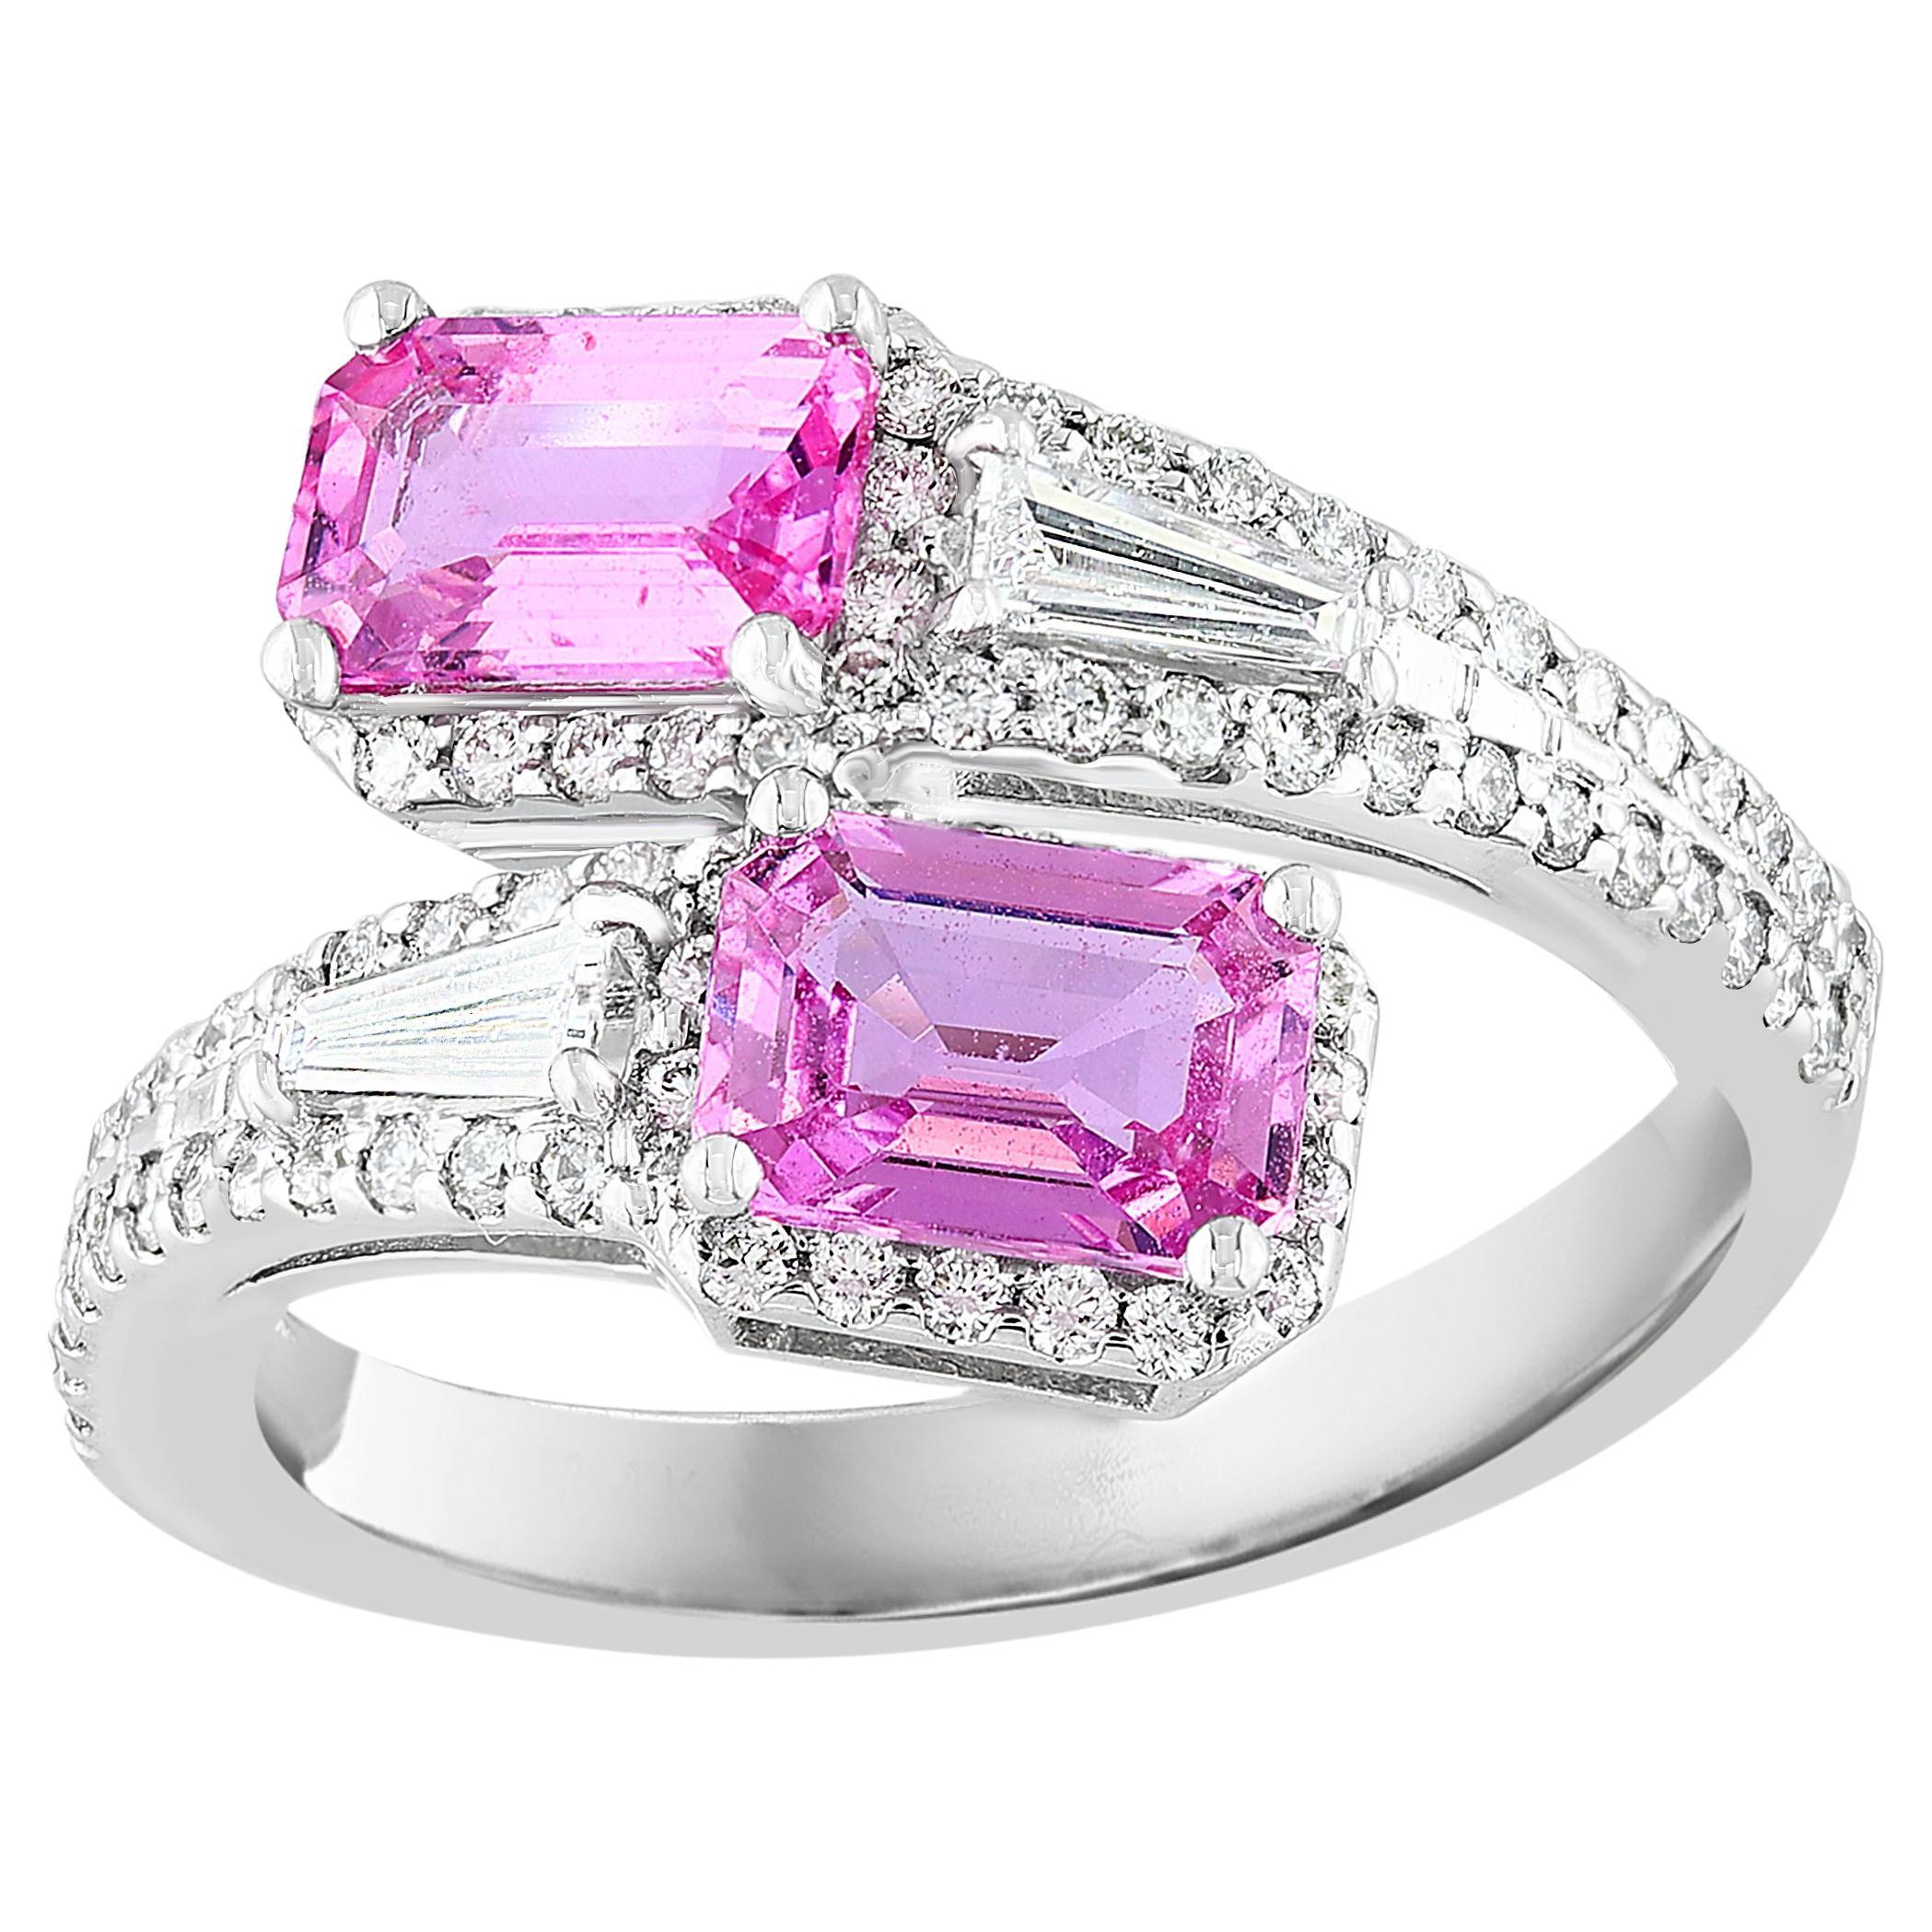 2.15 Carat Emerald Cut Pink Sapphire Diamond Toi Et Moi Ring 14K White Gold